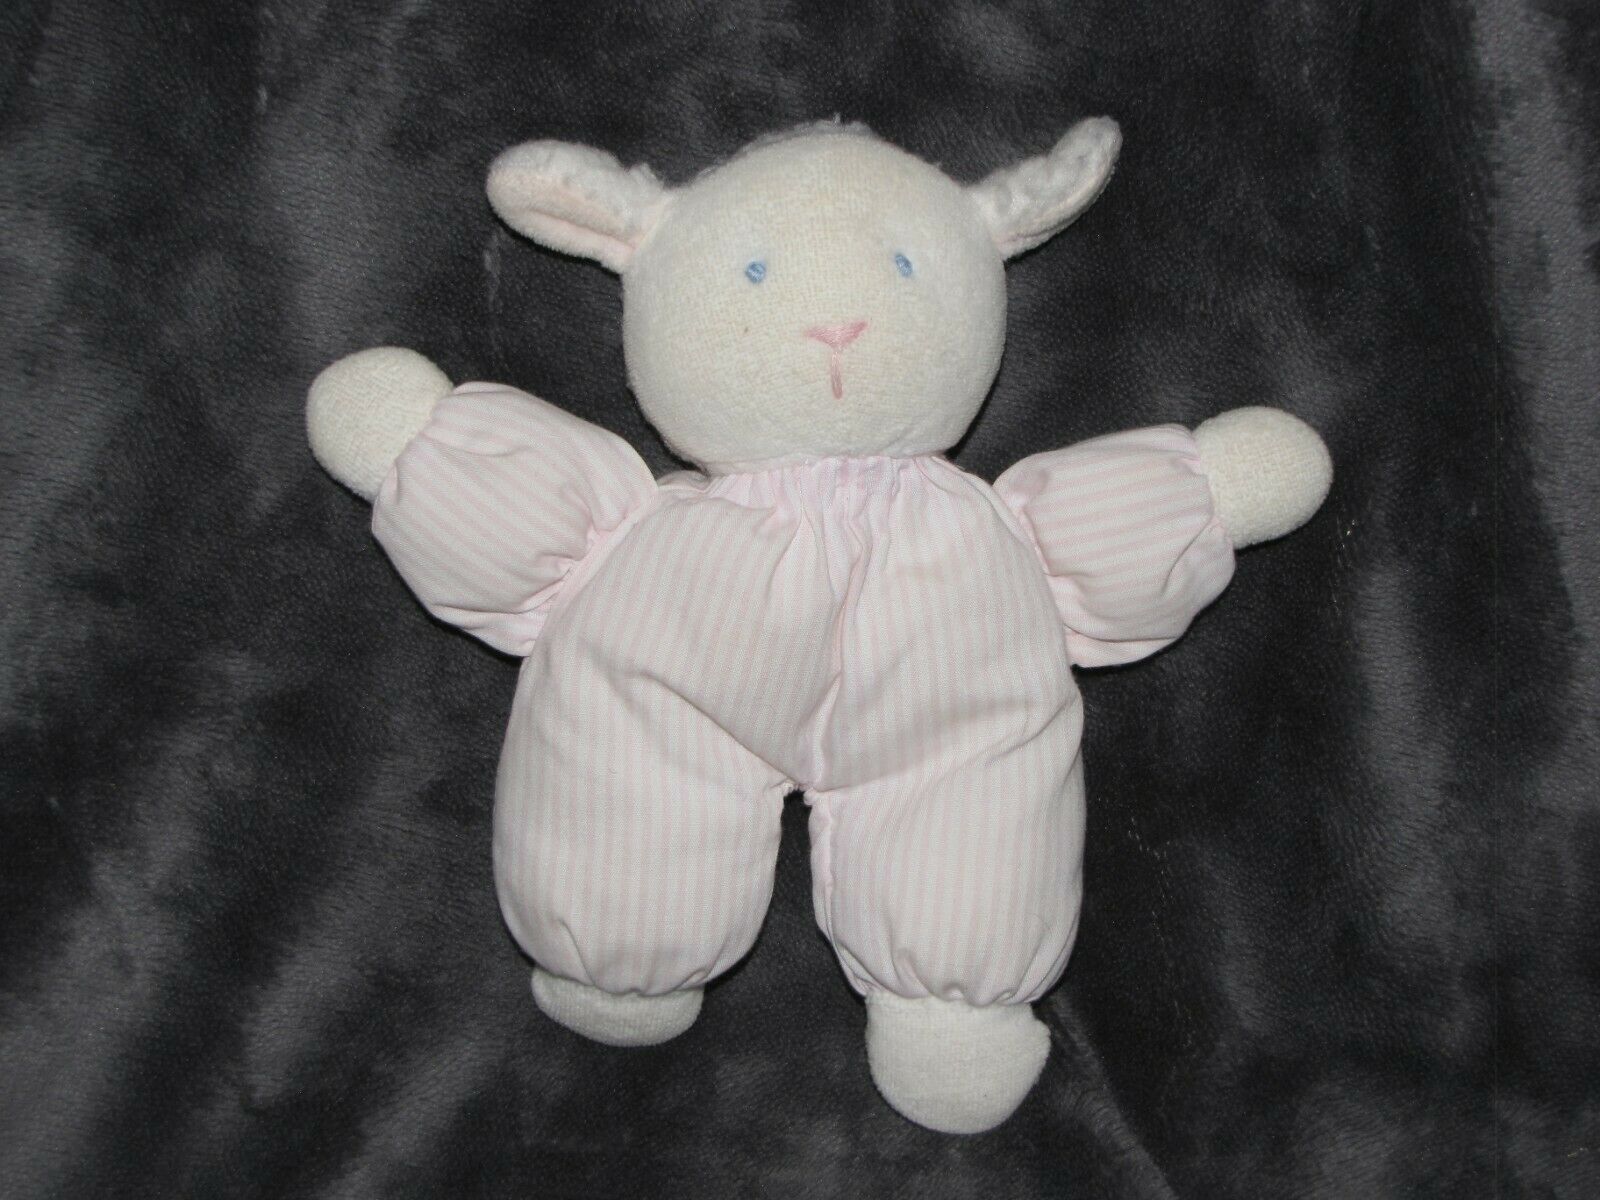 eden stuffed lamb